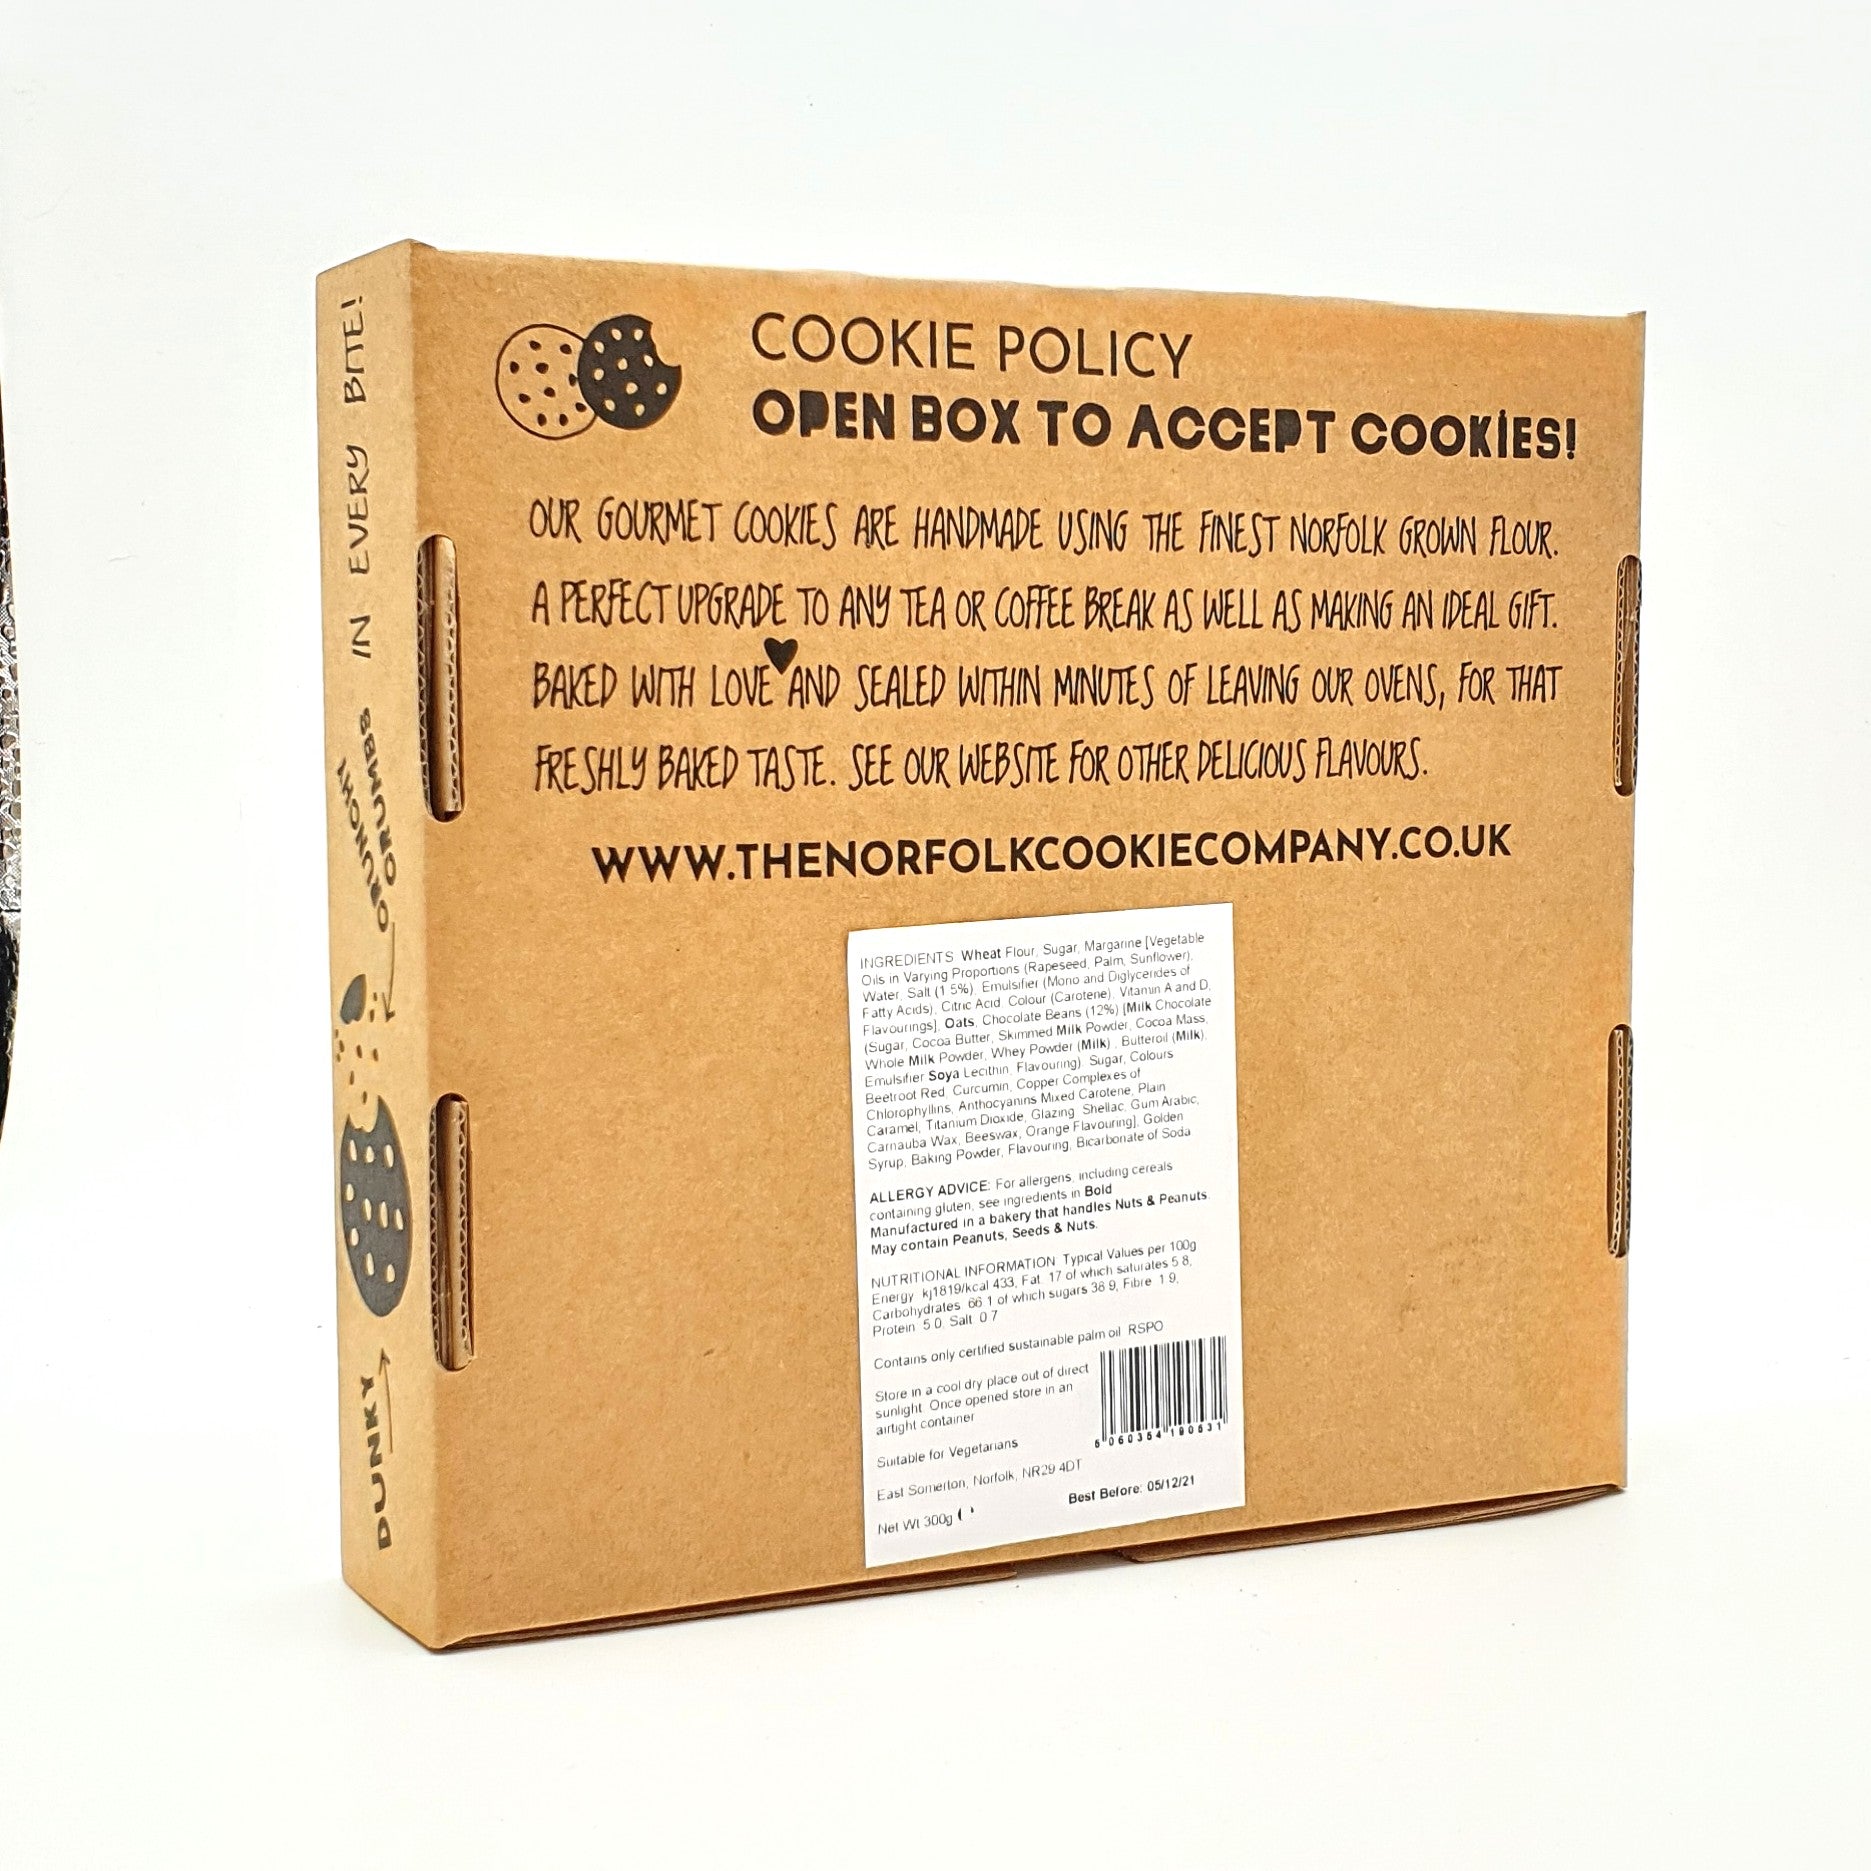 GIANT Cookie Gift Box - Chunky Choc Chip